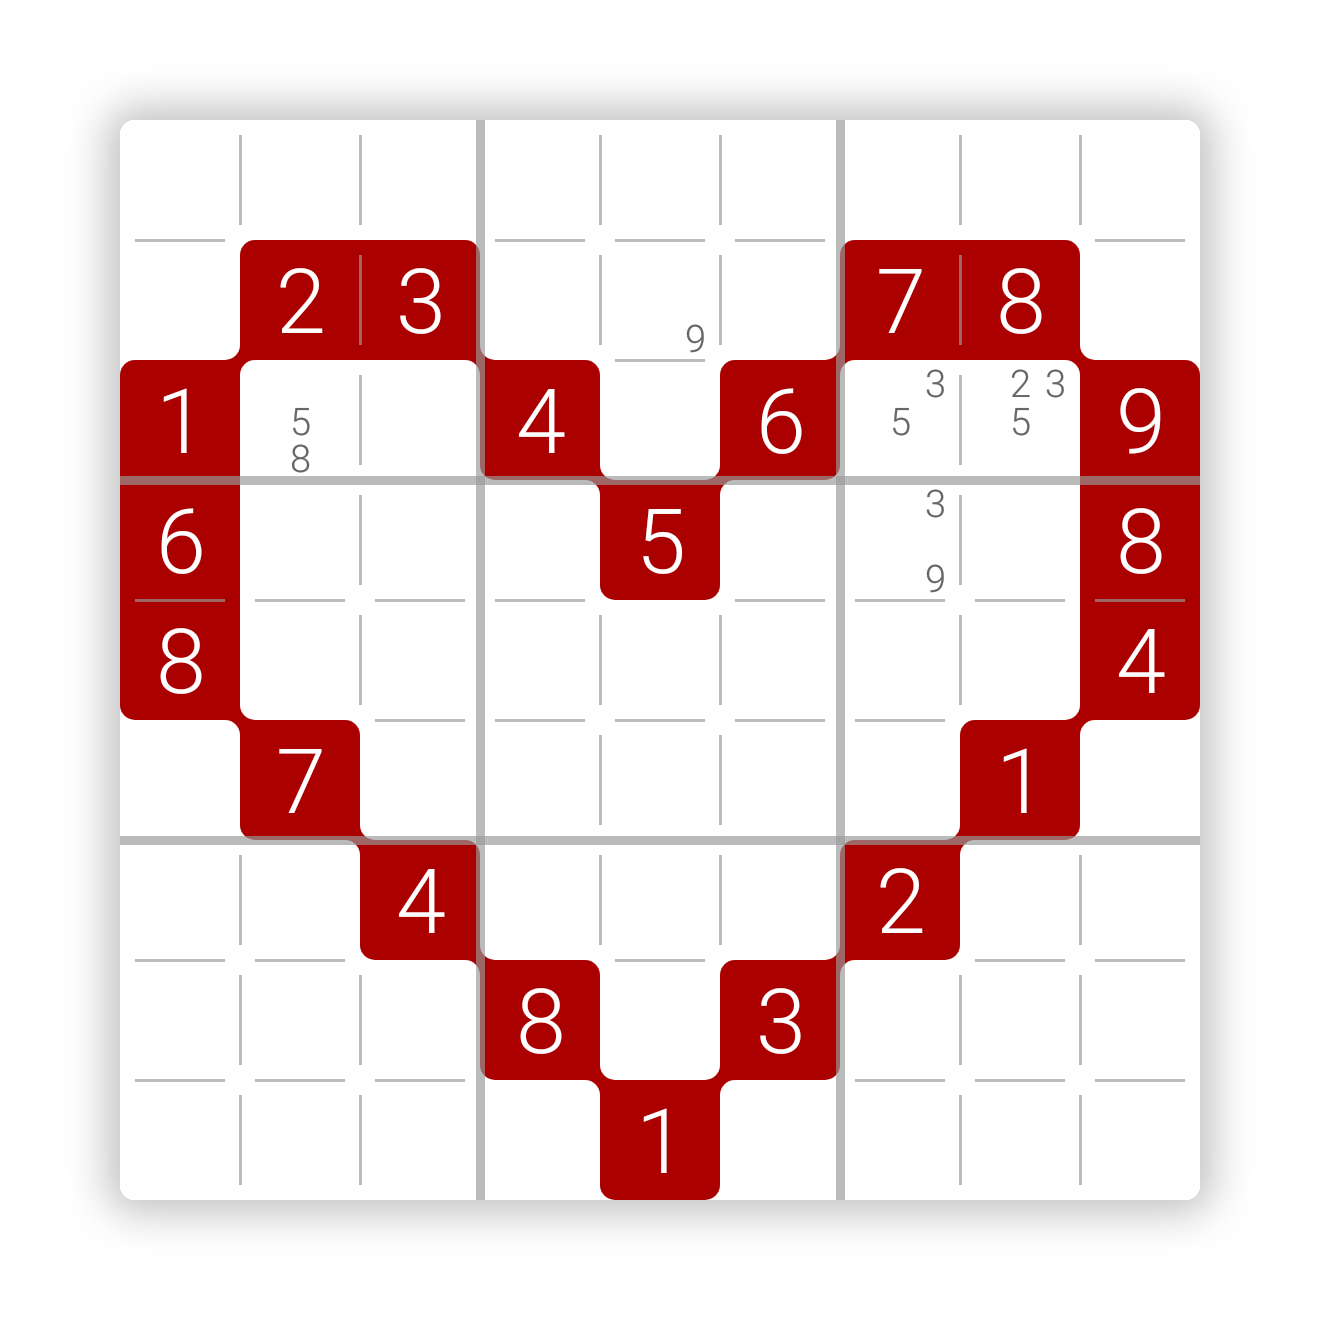 Valentine's Day Sudoku Puzzles Printable